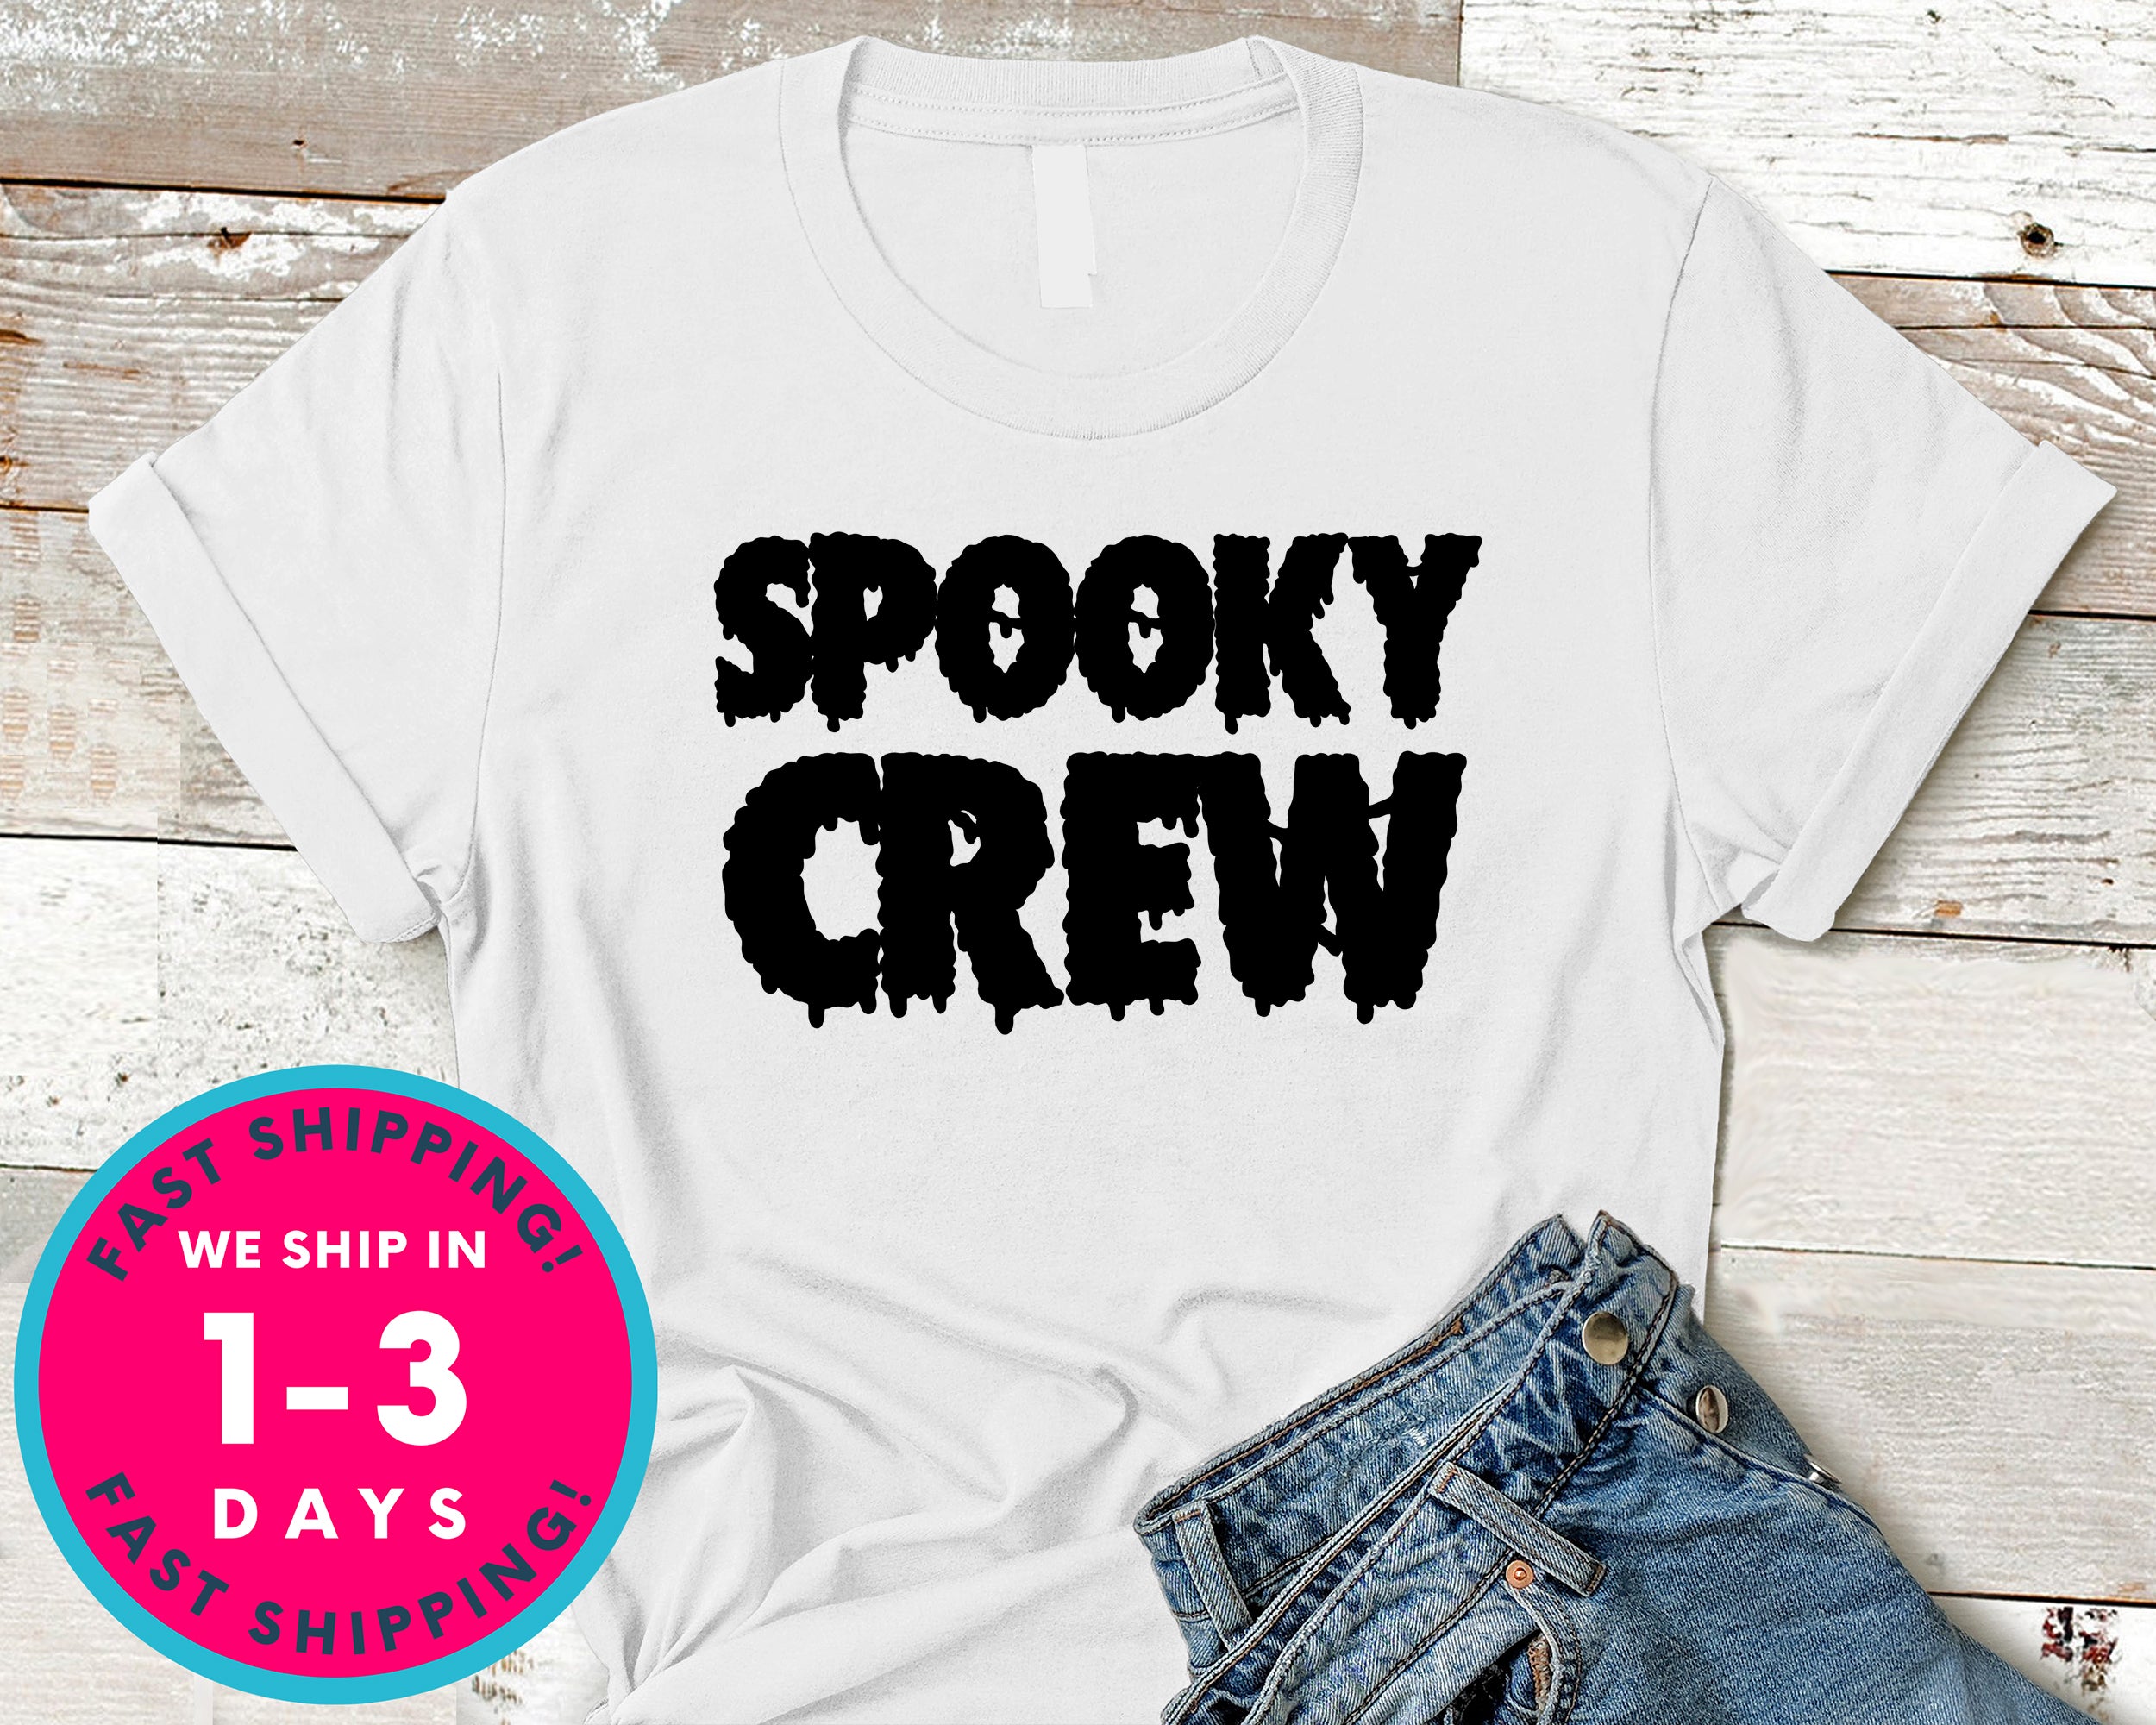 Spooky Crew Tshirt T-Shirt - Halloween Horror Scary Shirt